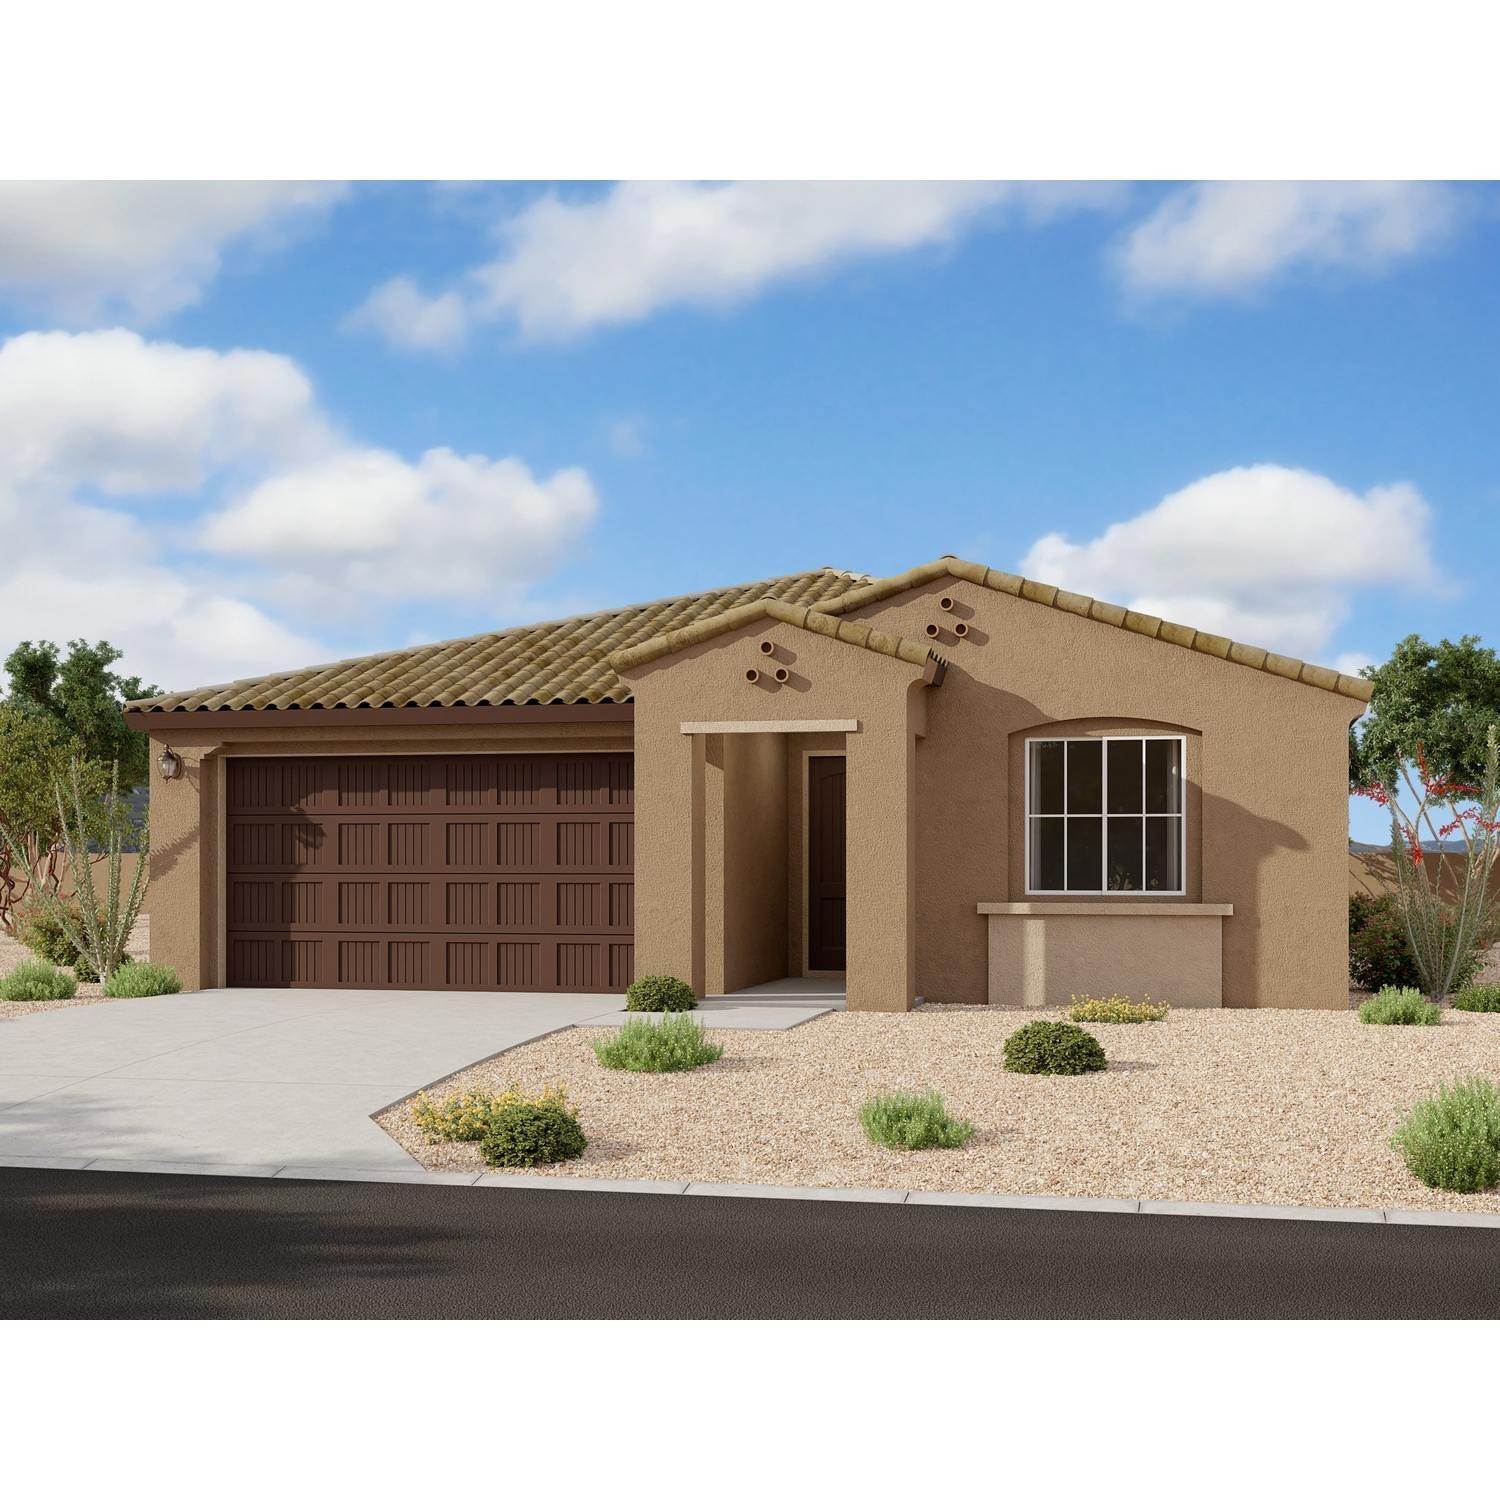 2. Single Family for Sale at Destination At Gateway 6061 South Oxley, Mesa, AZ 85212